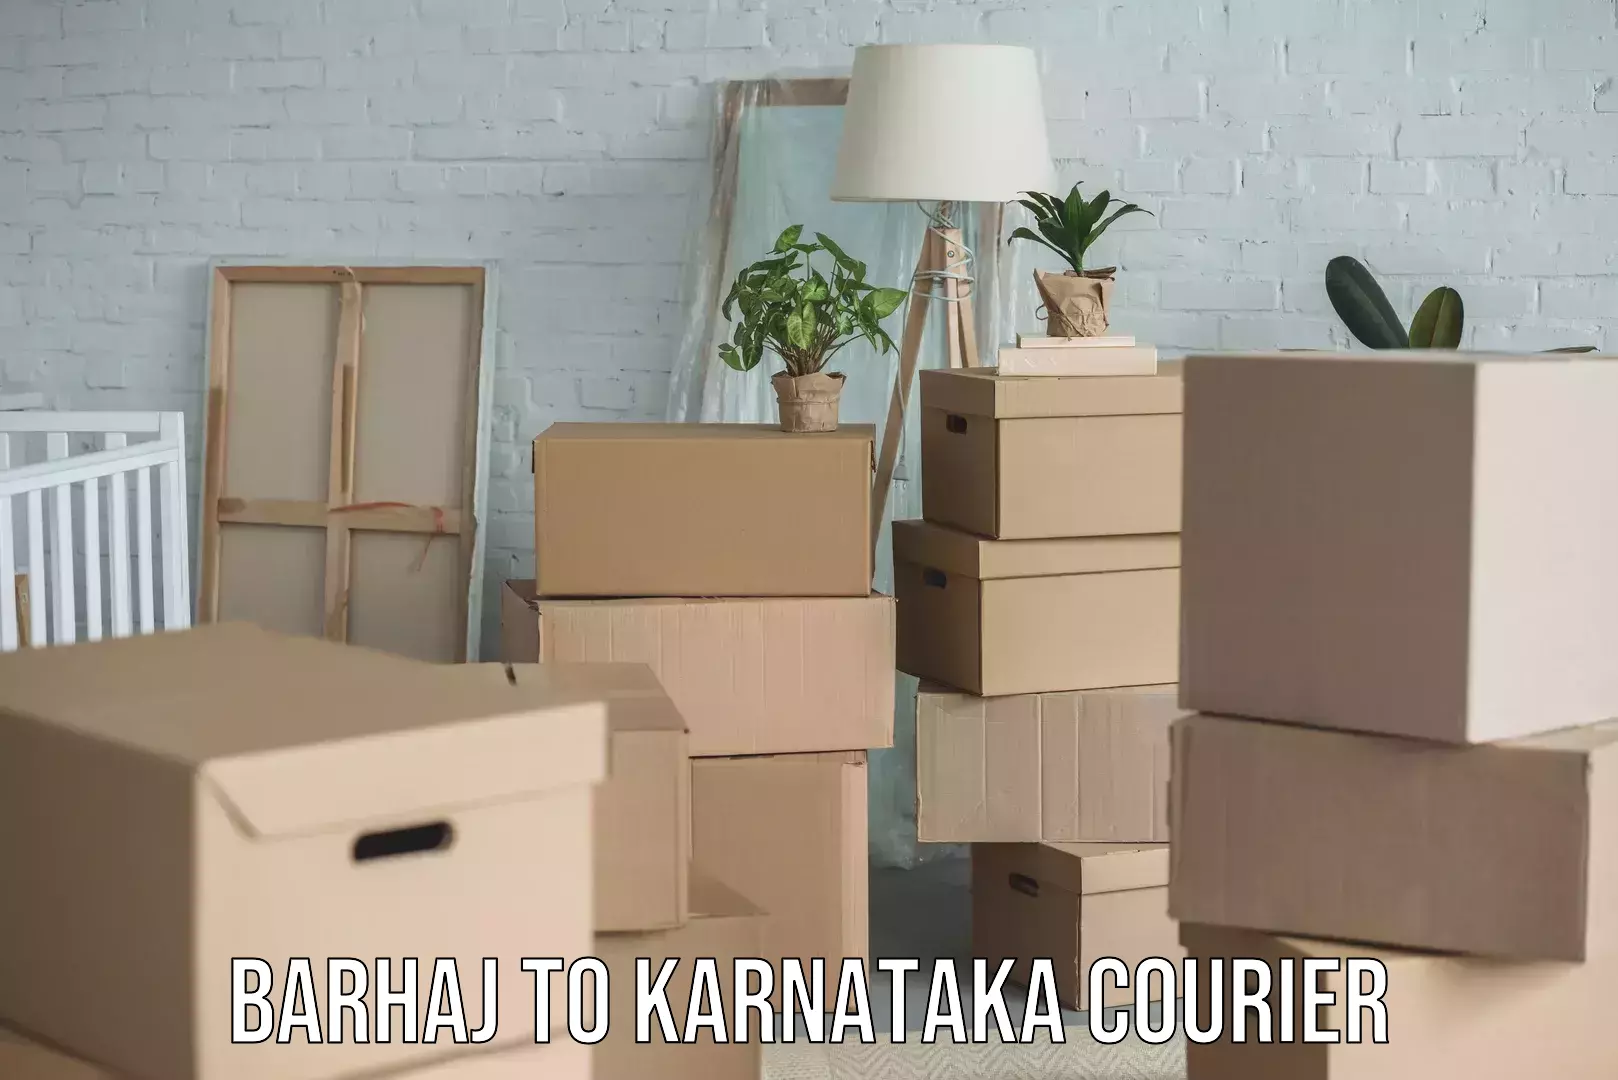 Cost-effective courier options Barhaj to Karnataka